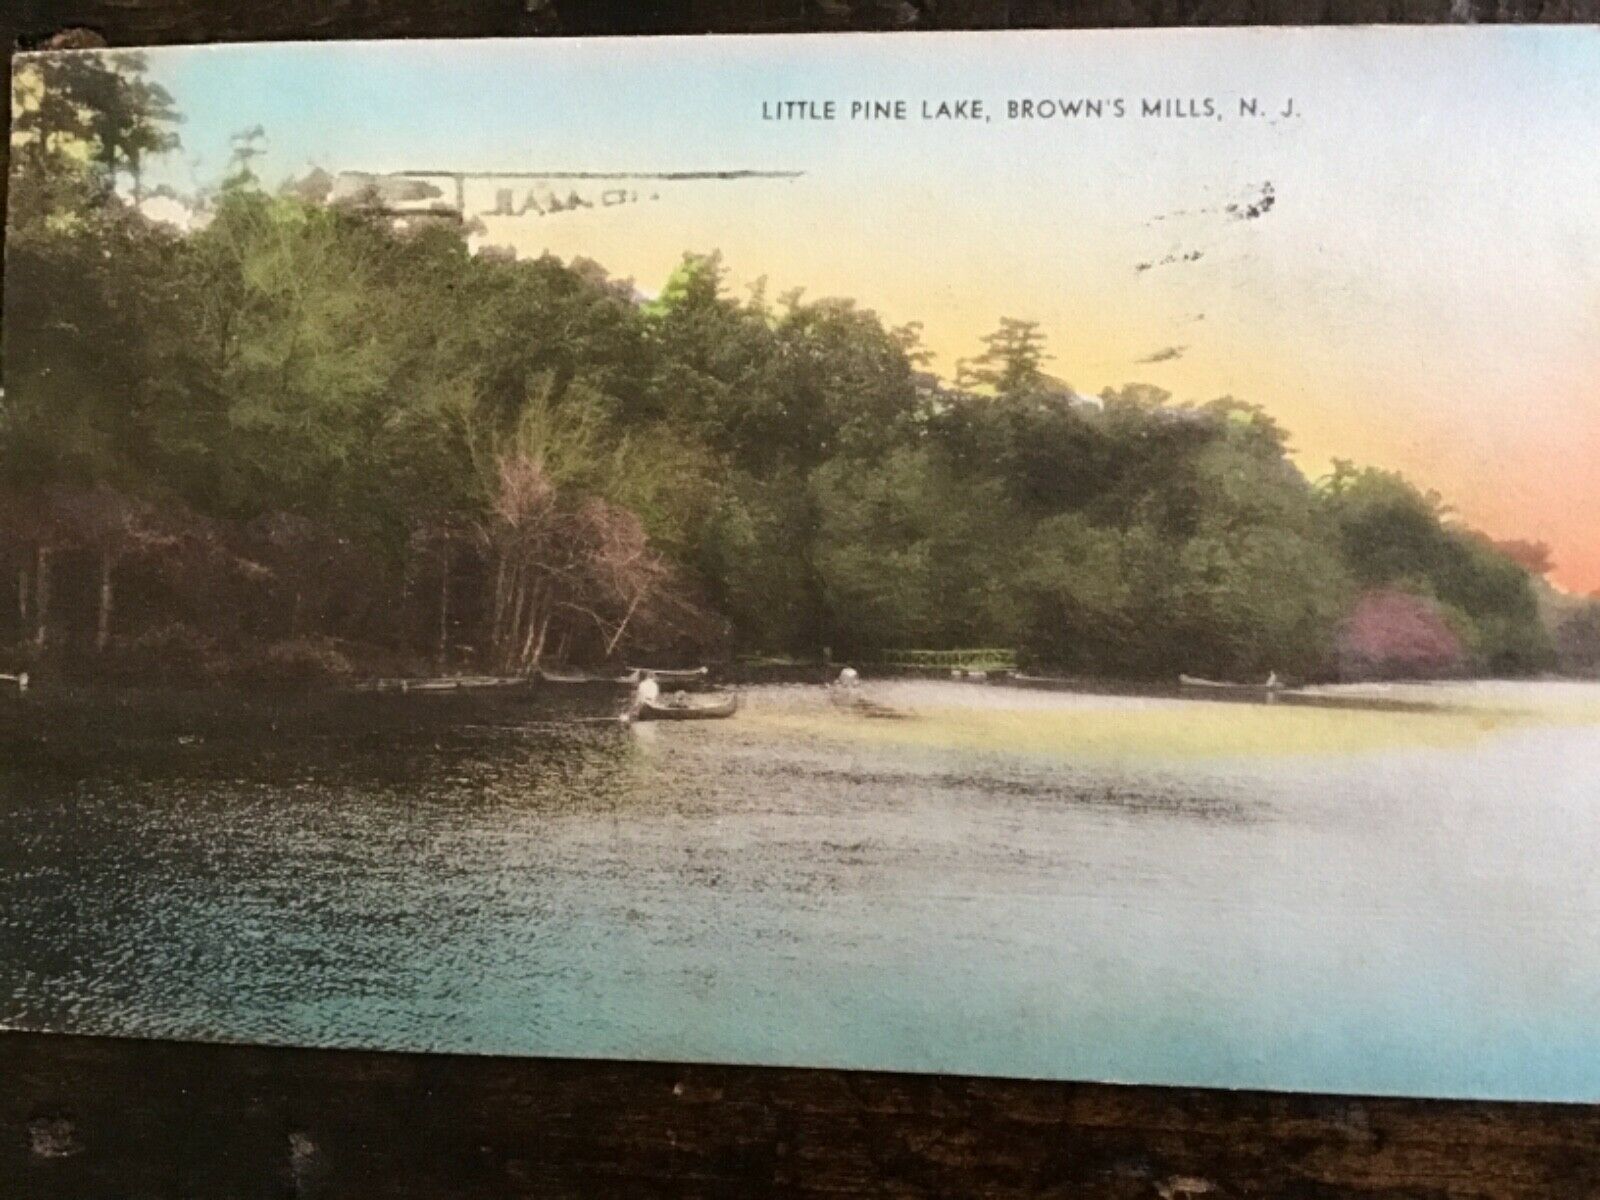 BROWNS MILLS - LITTLE PINE LAKE - 1948